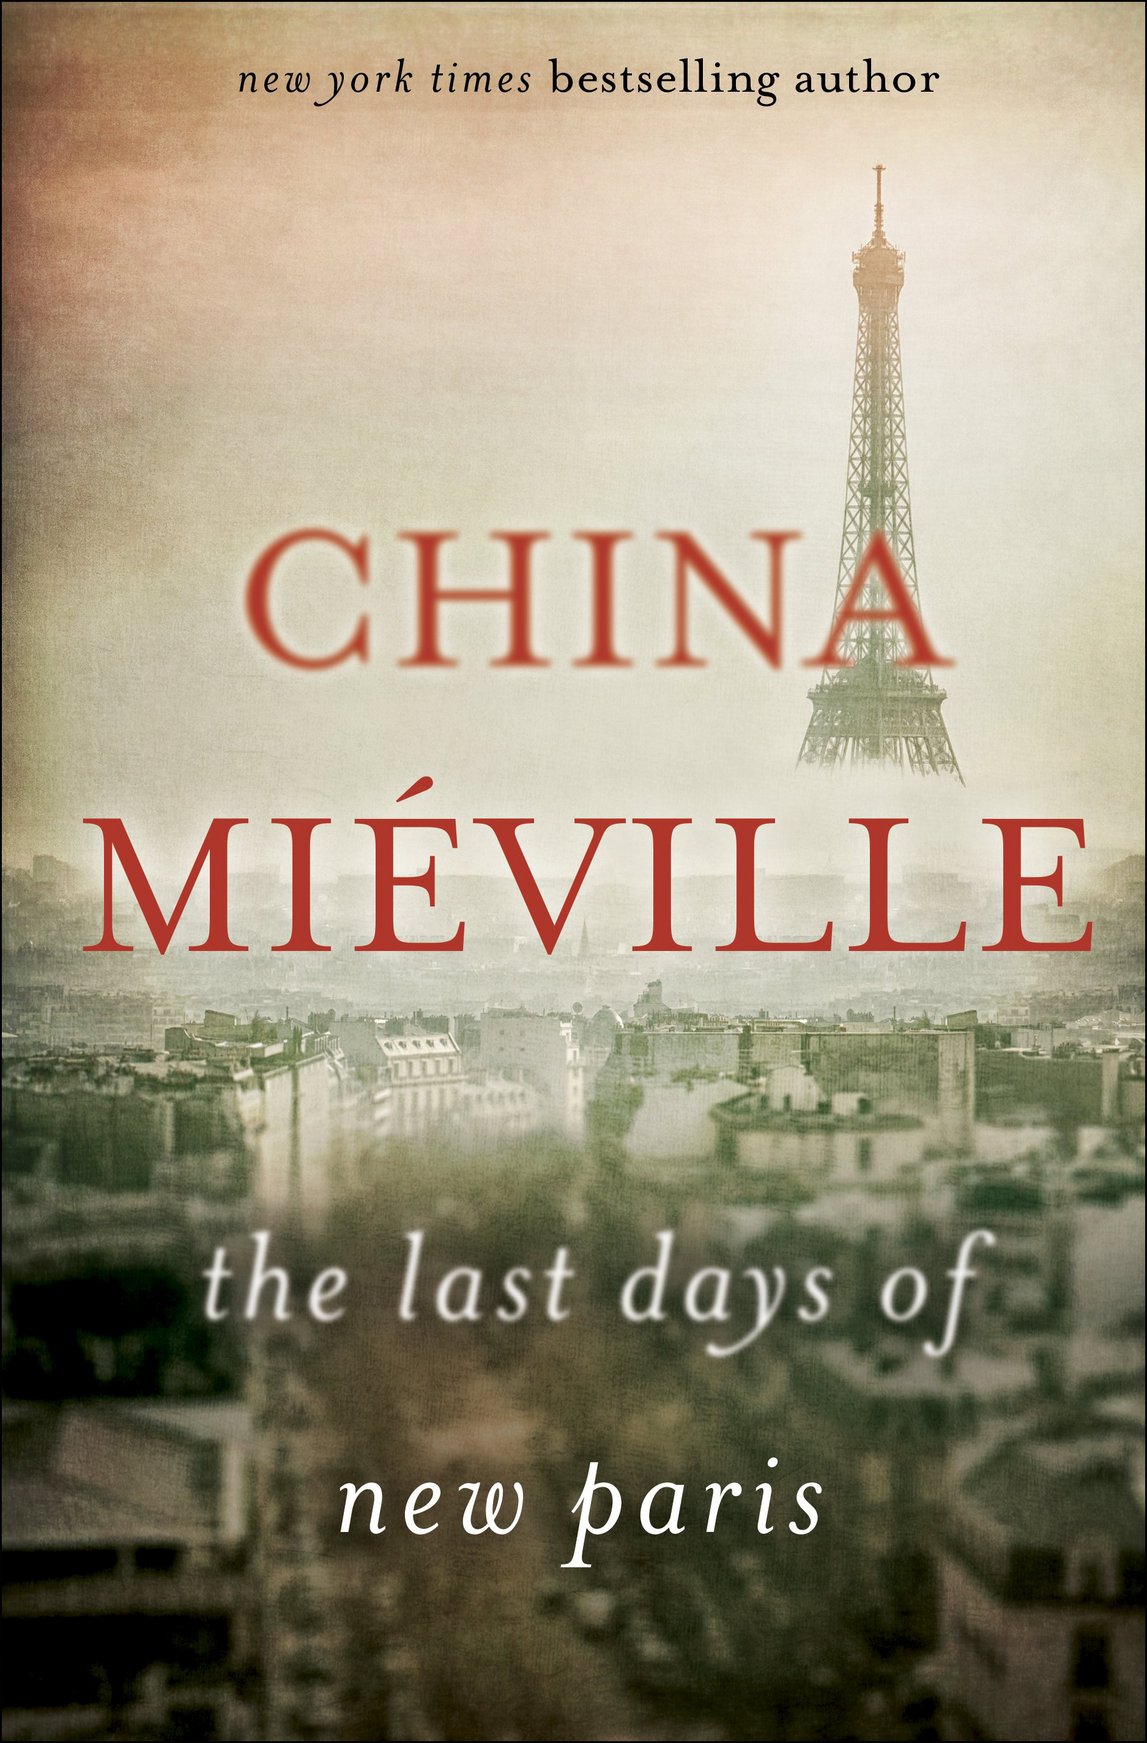 The Last Days of New Paris (2016) by China Miéville